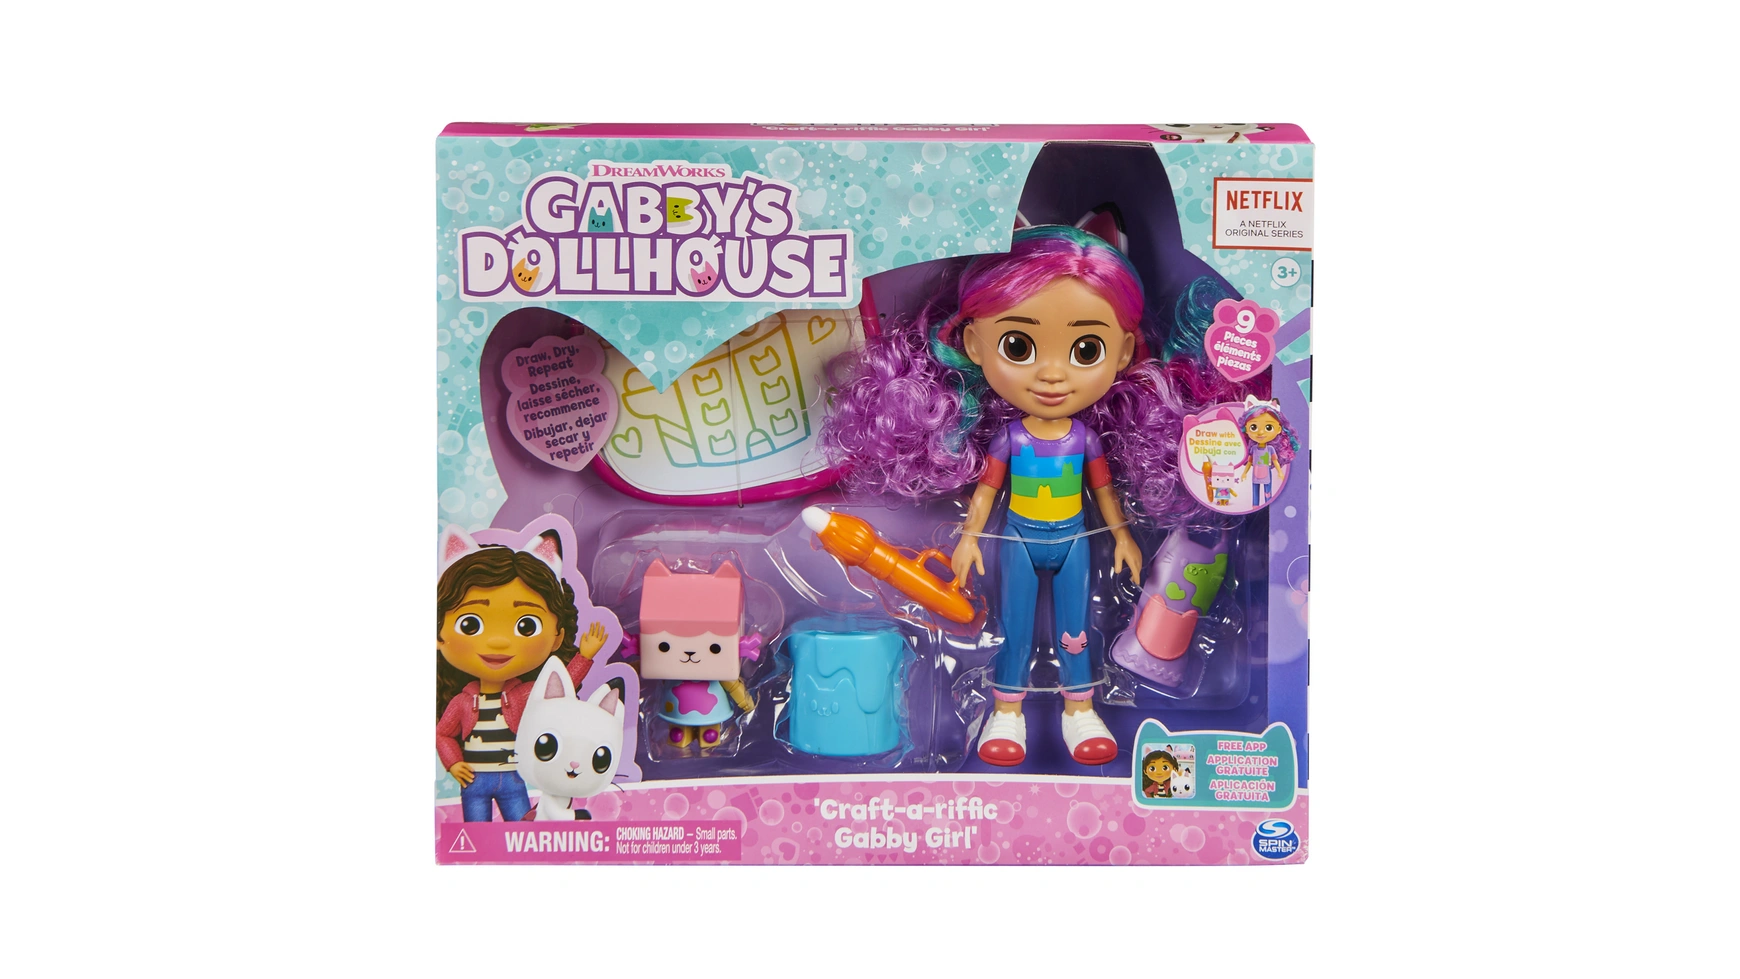 gabbys dollhouse праздничная кукла gabby girl высотой 20 см Gabbys Dollhouse Spin Master Dollhouse Rainbow Gabby Deluxe Craft Doll